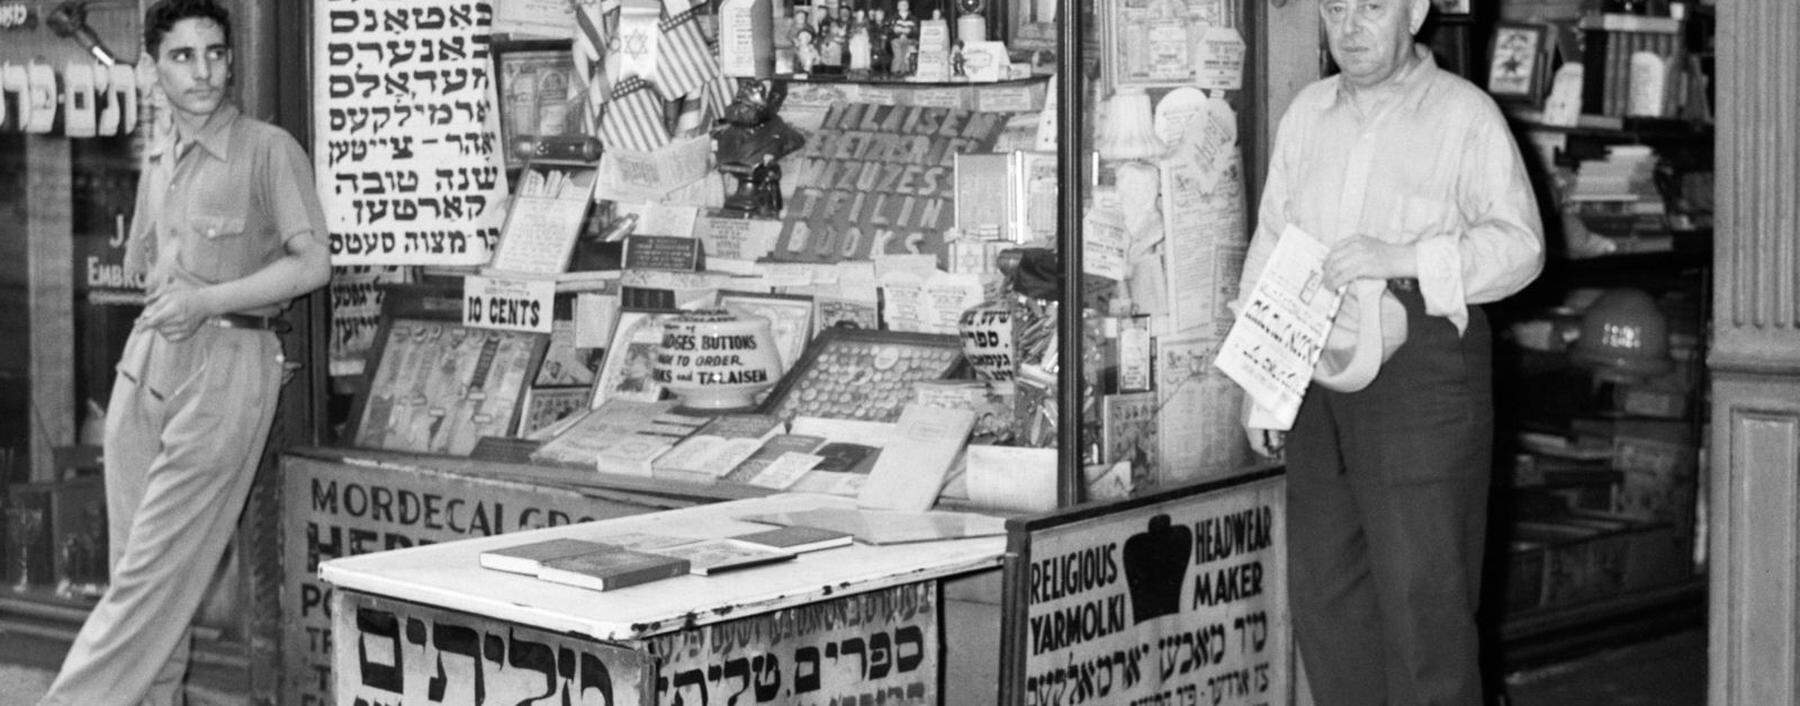 Papierwarengeschäft, Lower East Side, 1940er-Jahre.